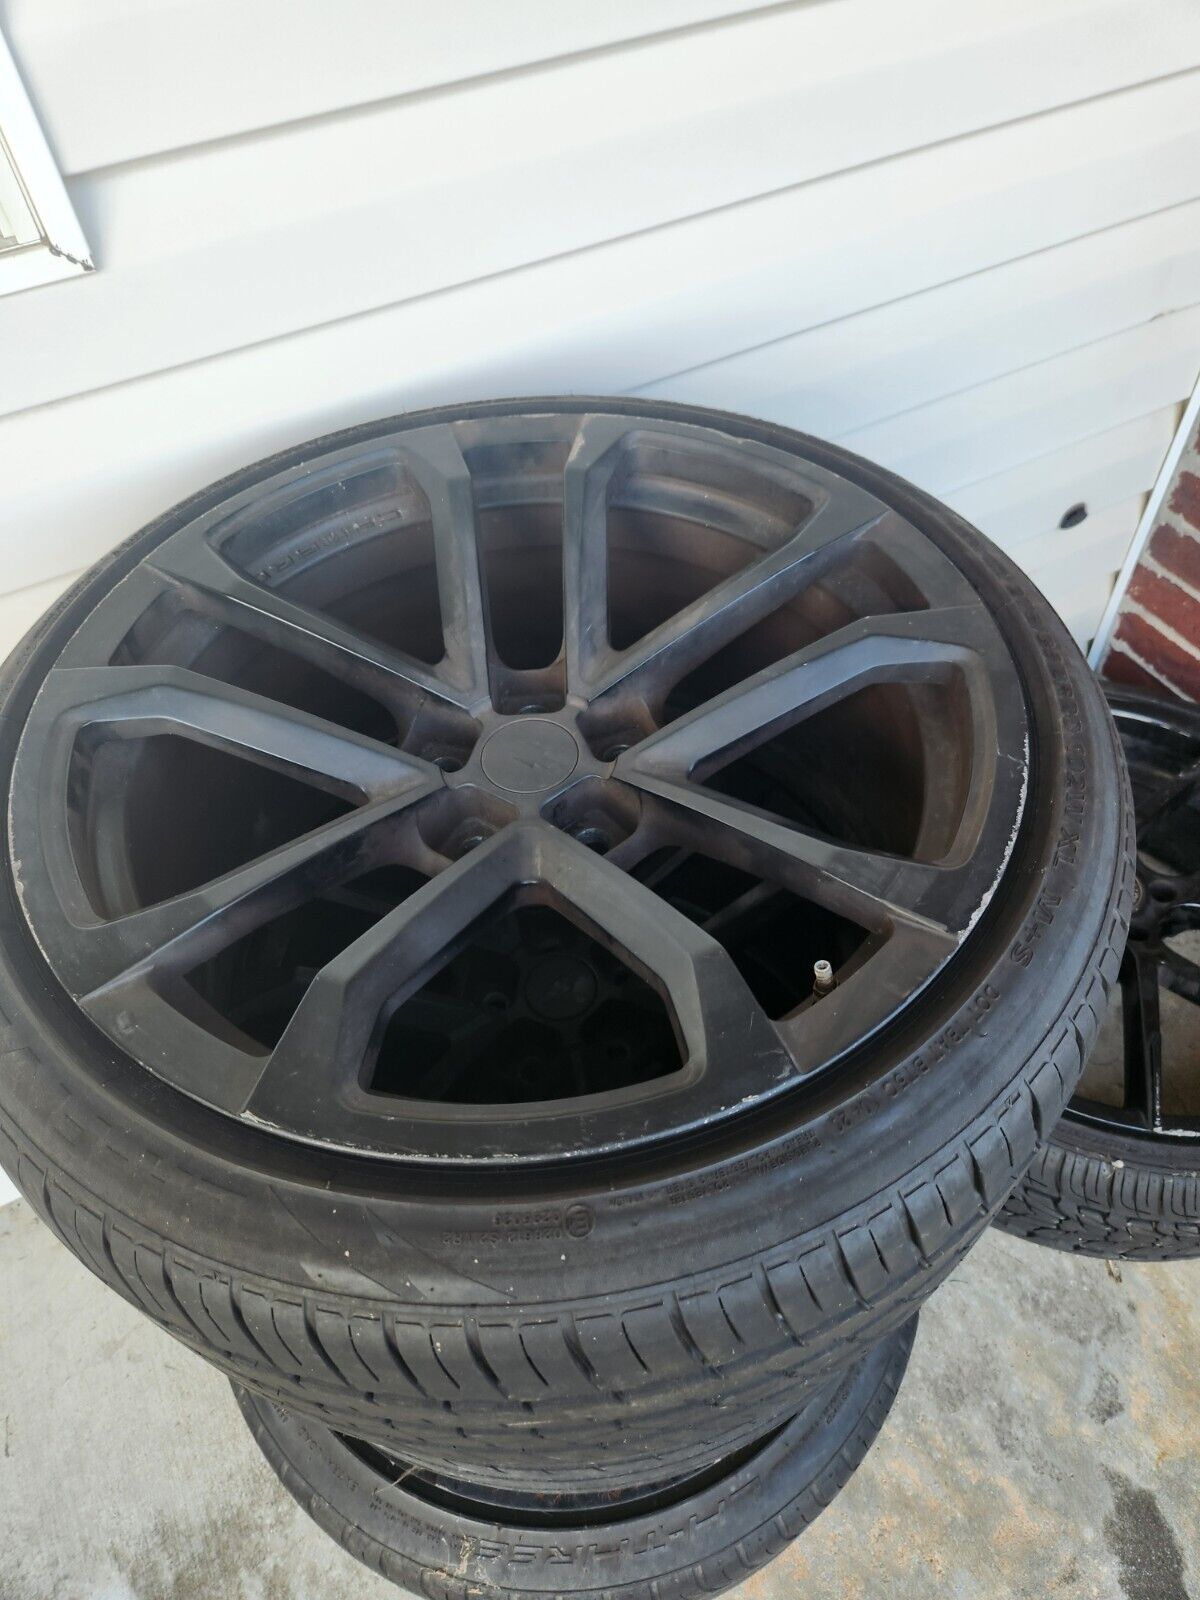 Camaro Rims and tires, black three tires good tread